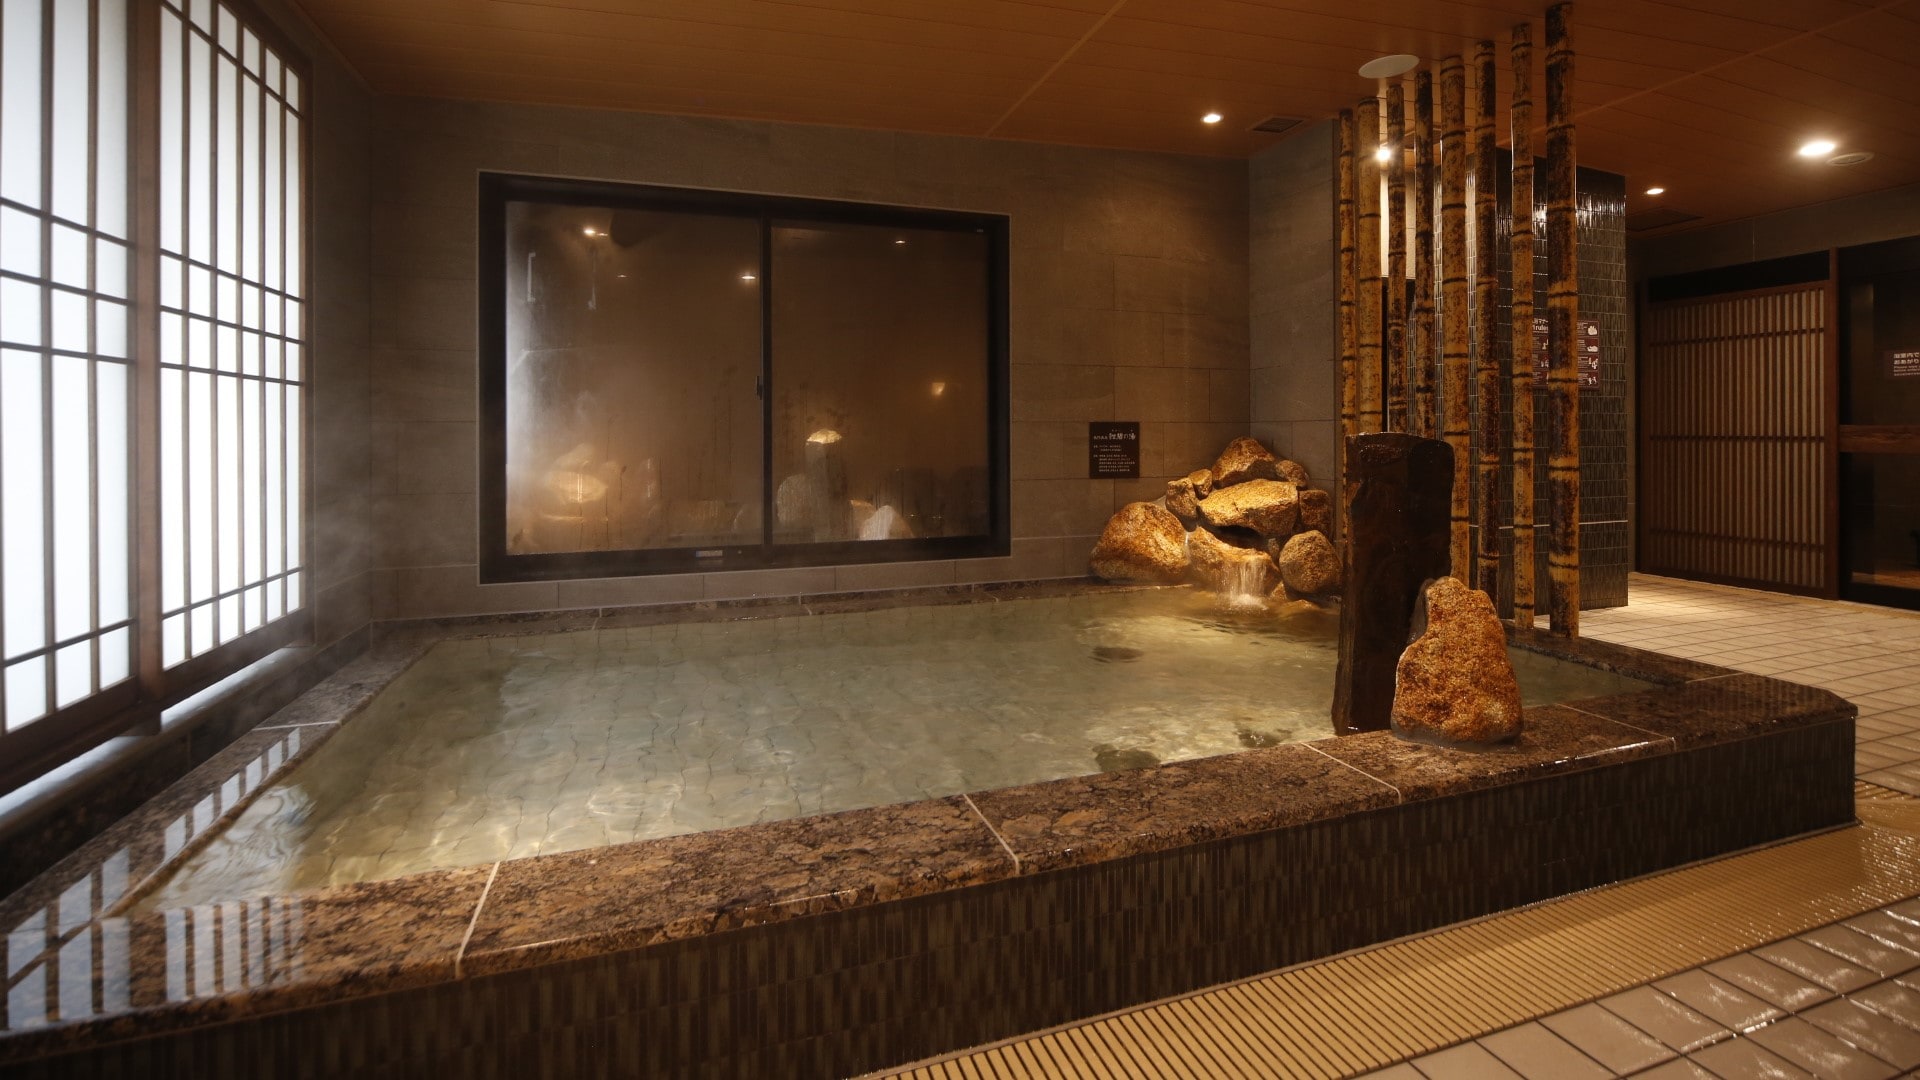 ◇ Men's large public bath, natural hot spring, hypotonic alkaline 40-42 degrees